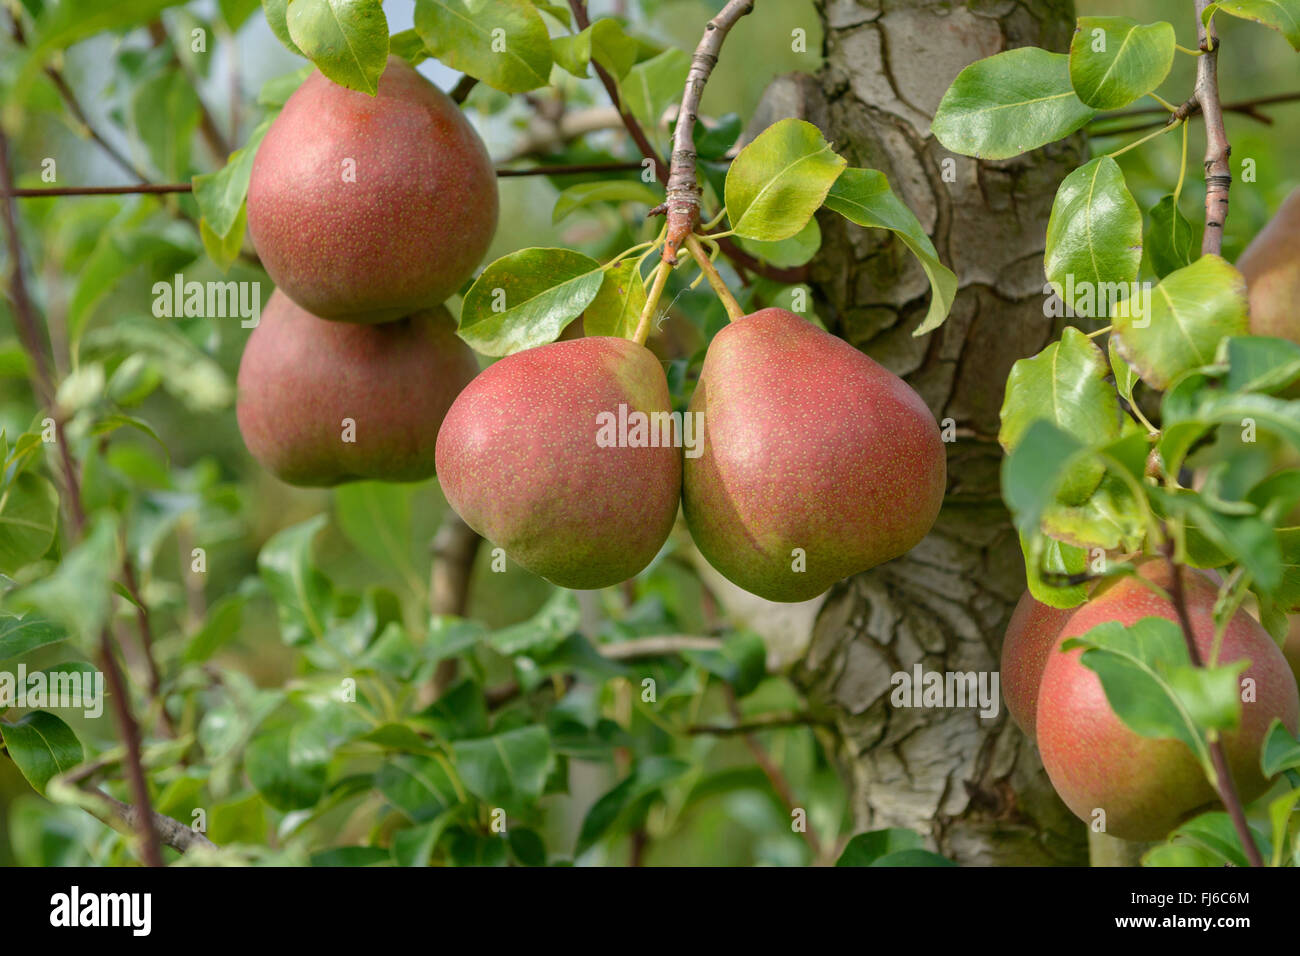 Common pear (Pyrus communis 'Eckehard', Pyrus communis Eckehard), pears on a tree, cultivar Eckehard, Germany Stock Photo